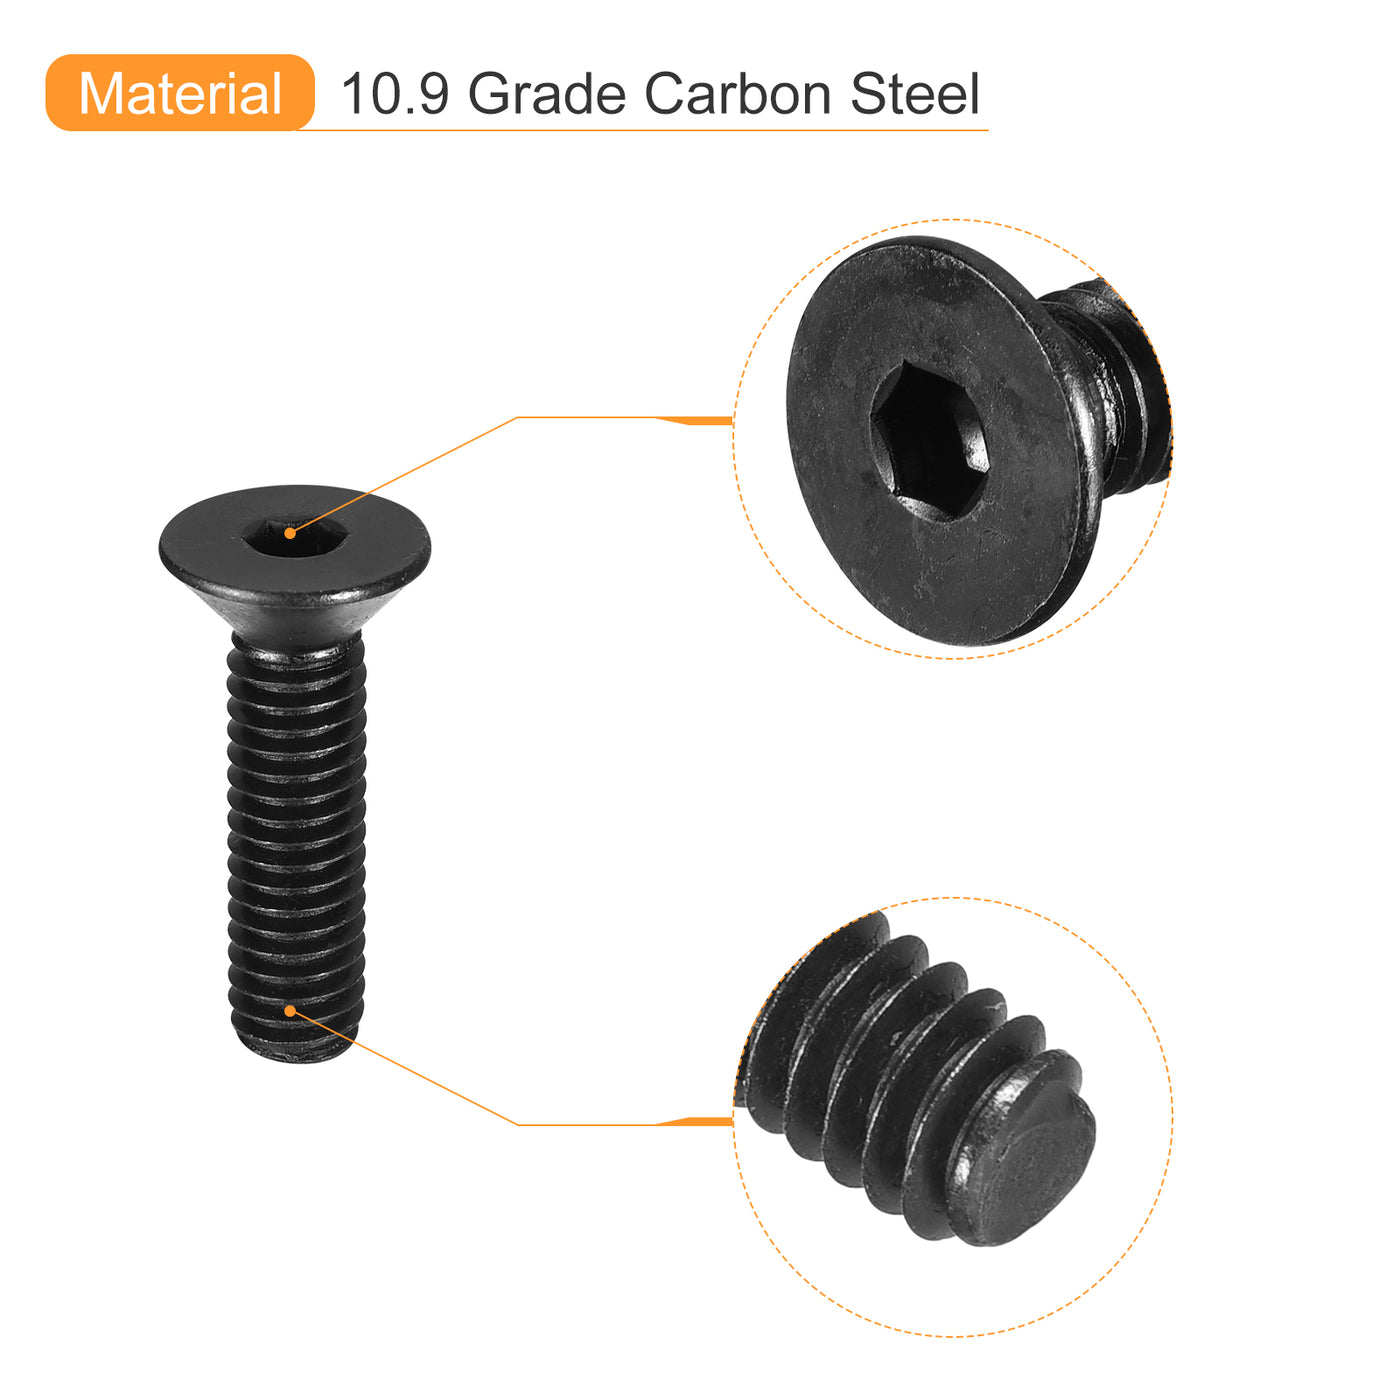 uxcell Uxcell 5/16-18x1-1/4" Flat Head Socket Cap Screws, 10.9 Grade Carbon Steel, 20PCS